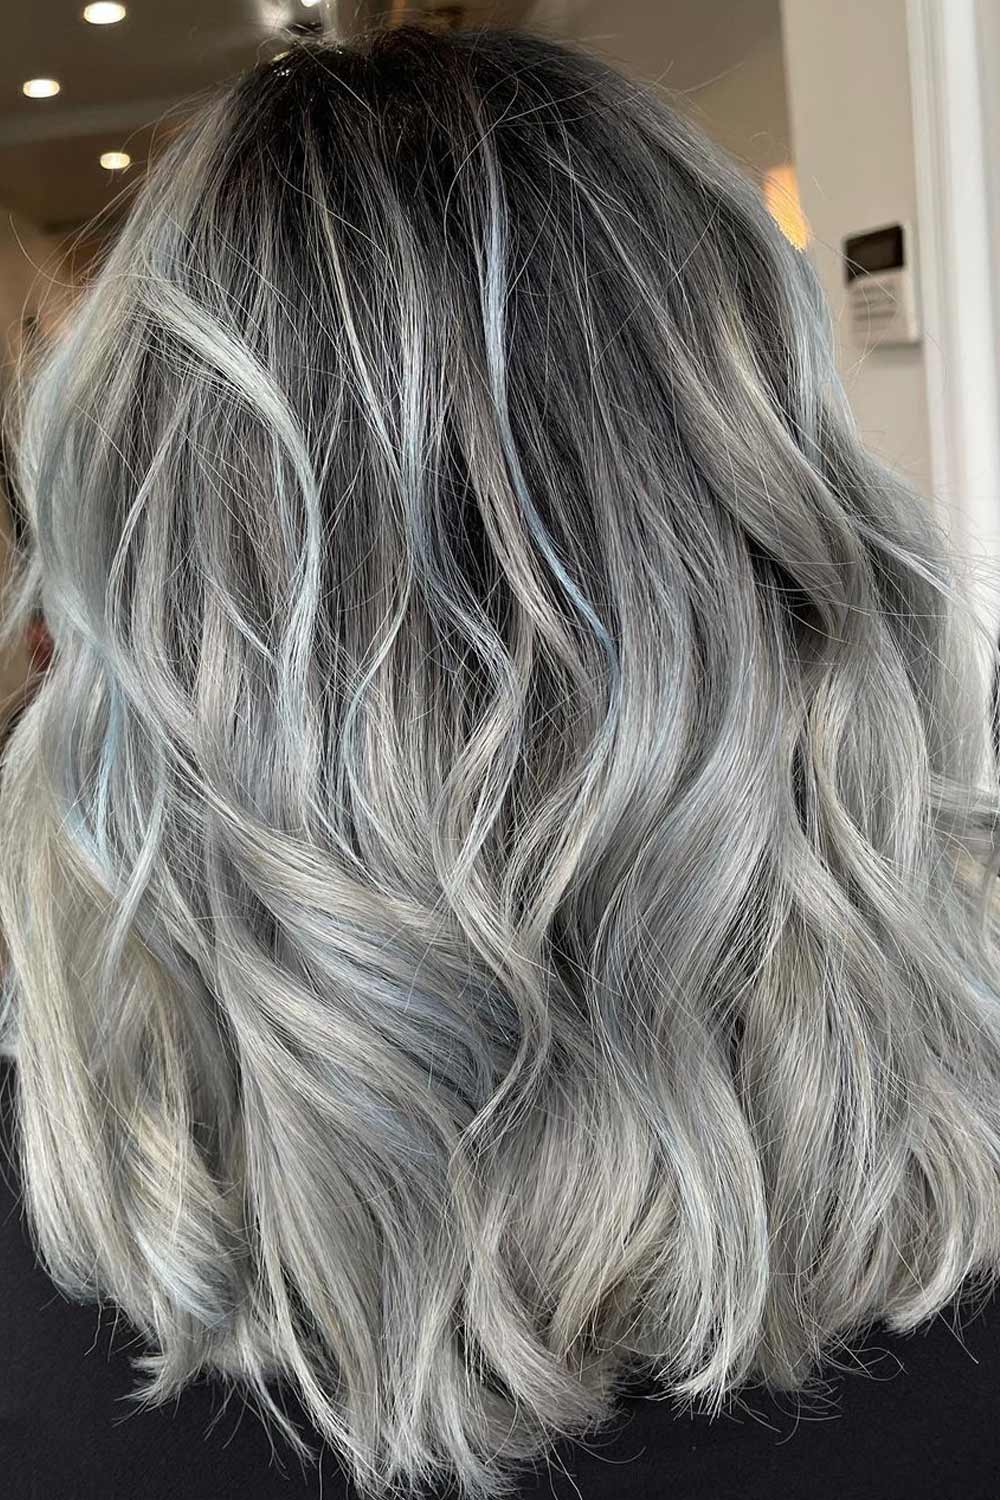 Silver and Blonde Balayage Medium Hair